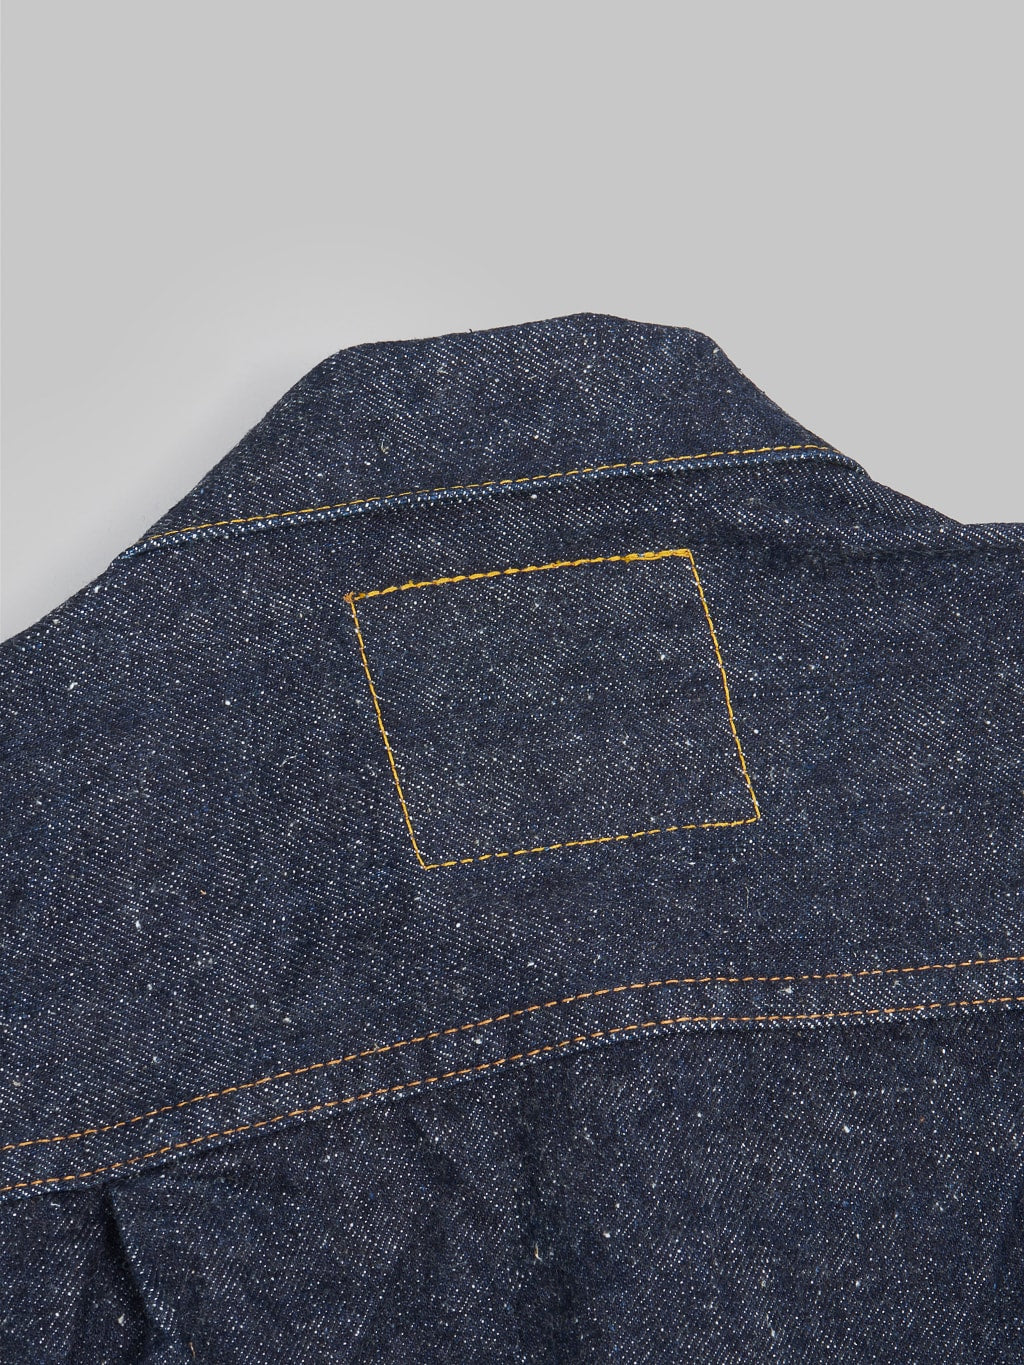 Samurai Jeans S5512PX 15oz Otokogi Denim Type 1 Jacket stitching